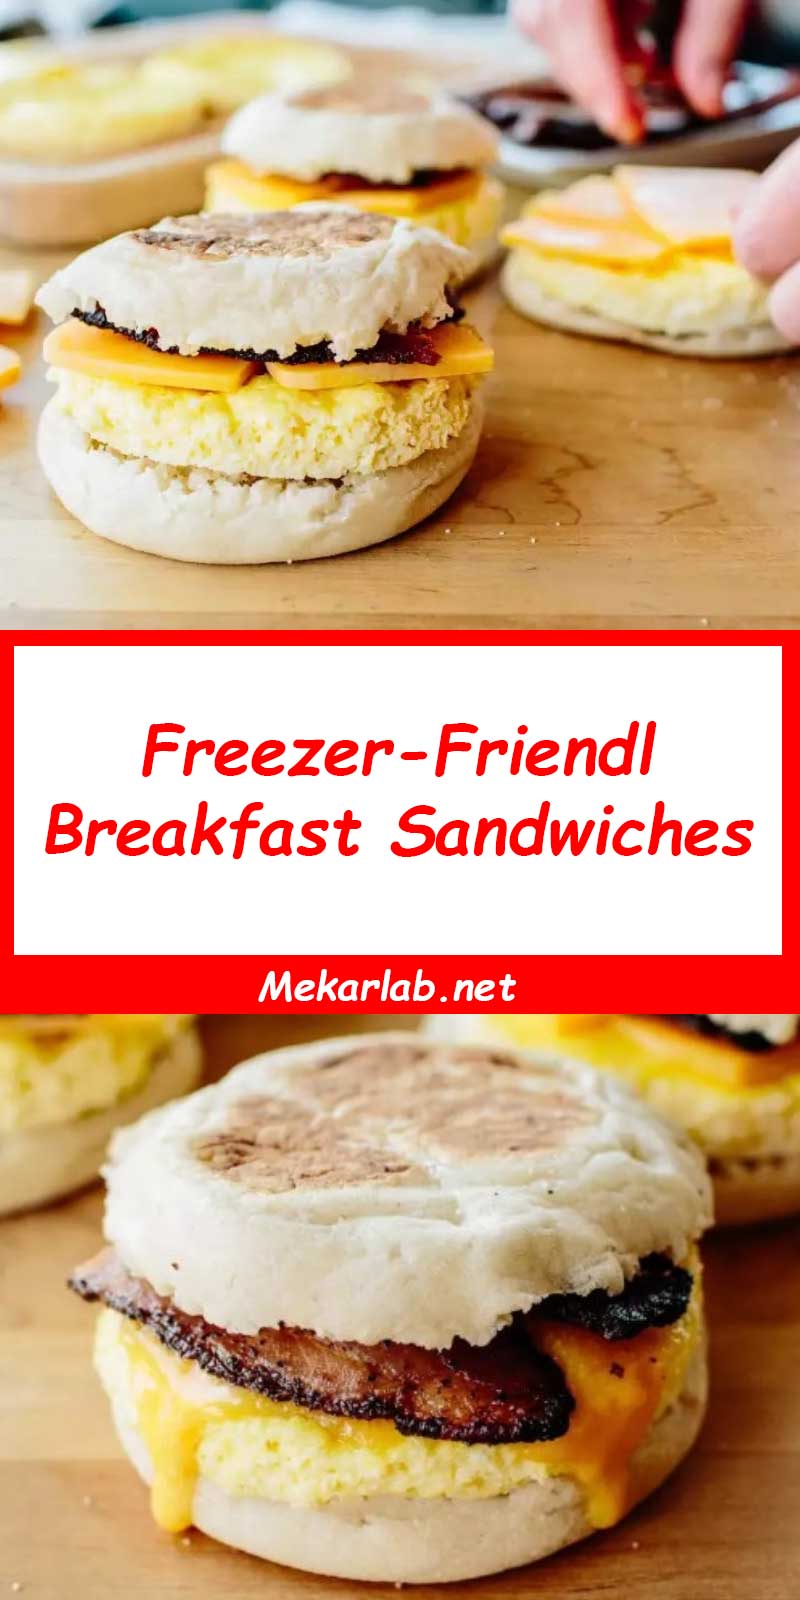 Freezer-Friendly Breakfast Sandwiches